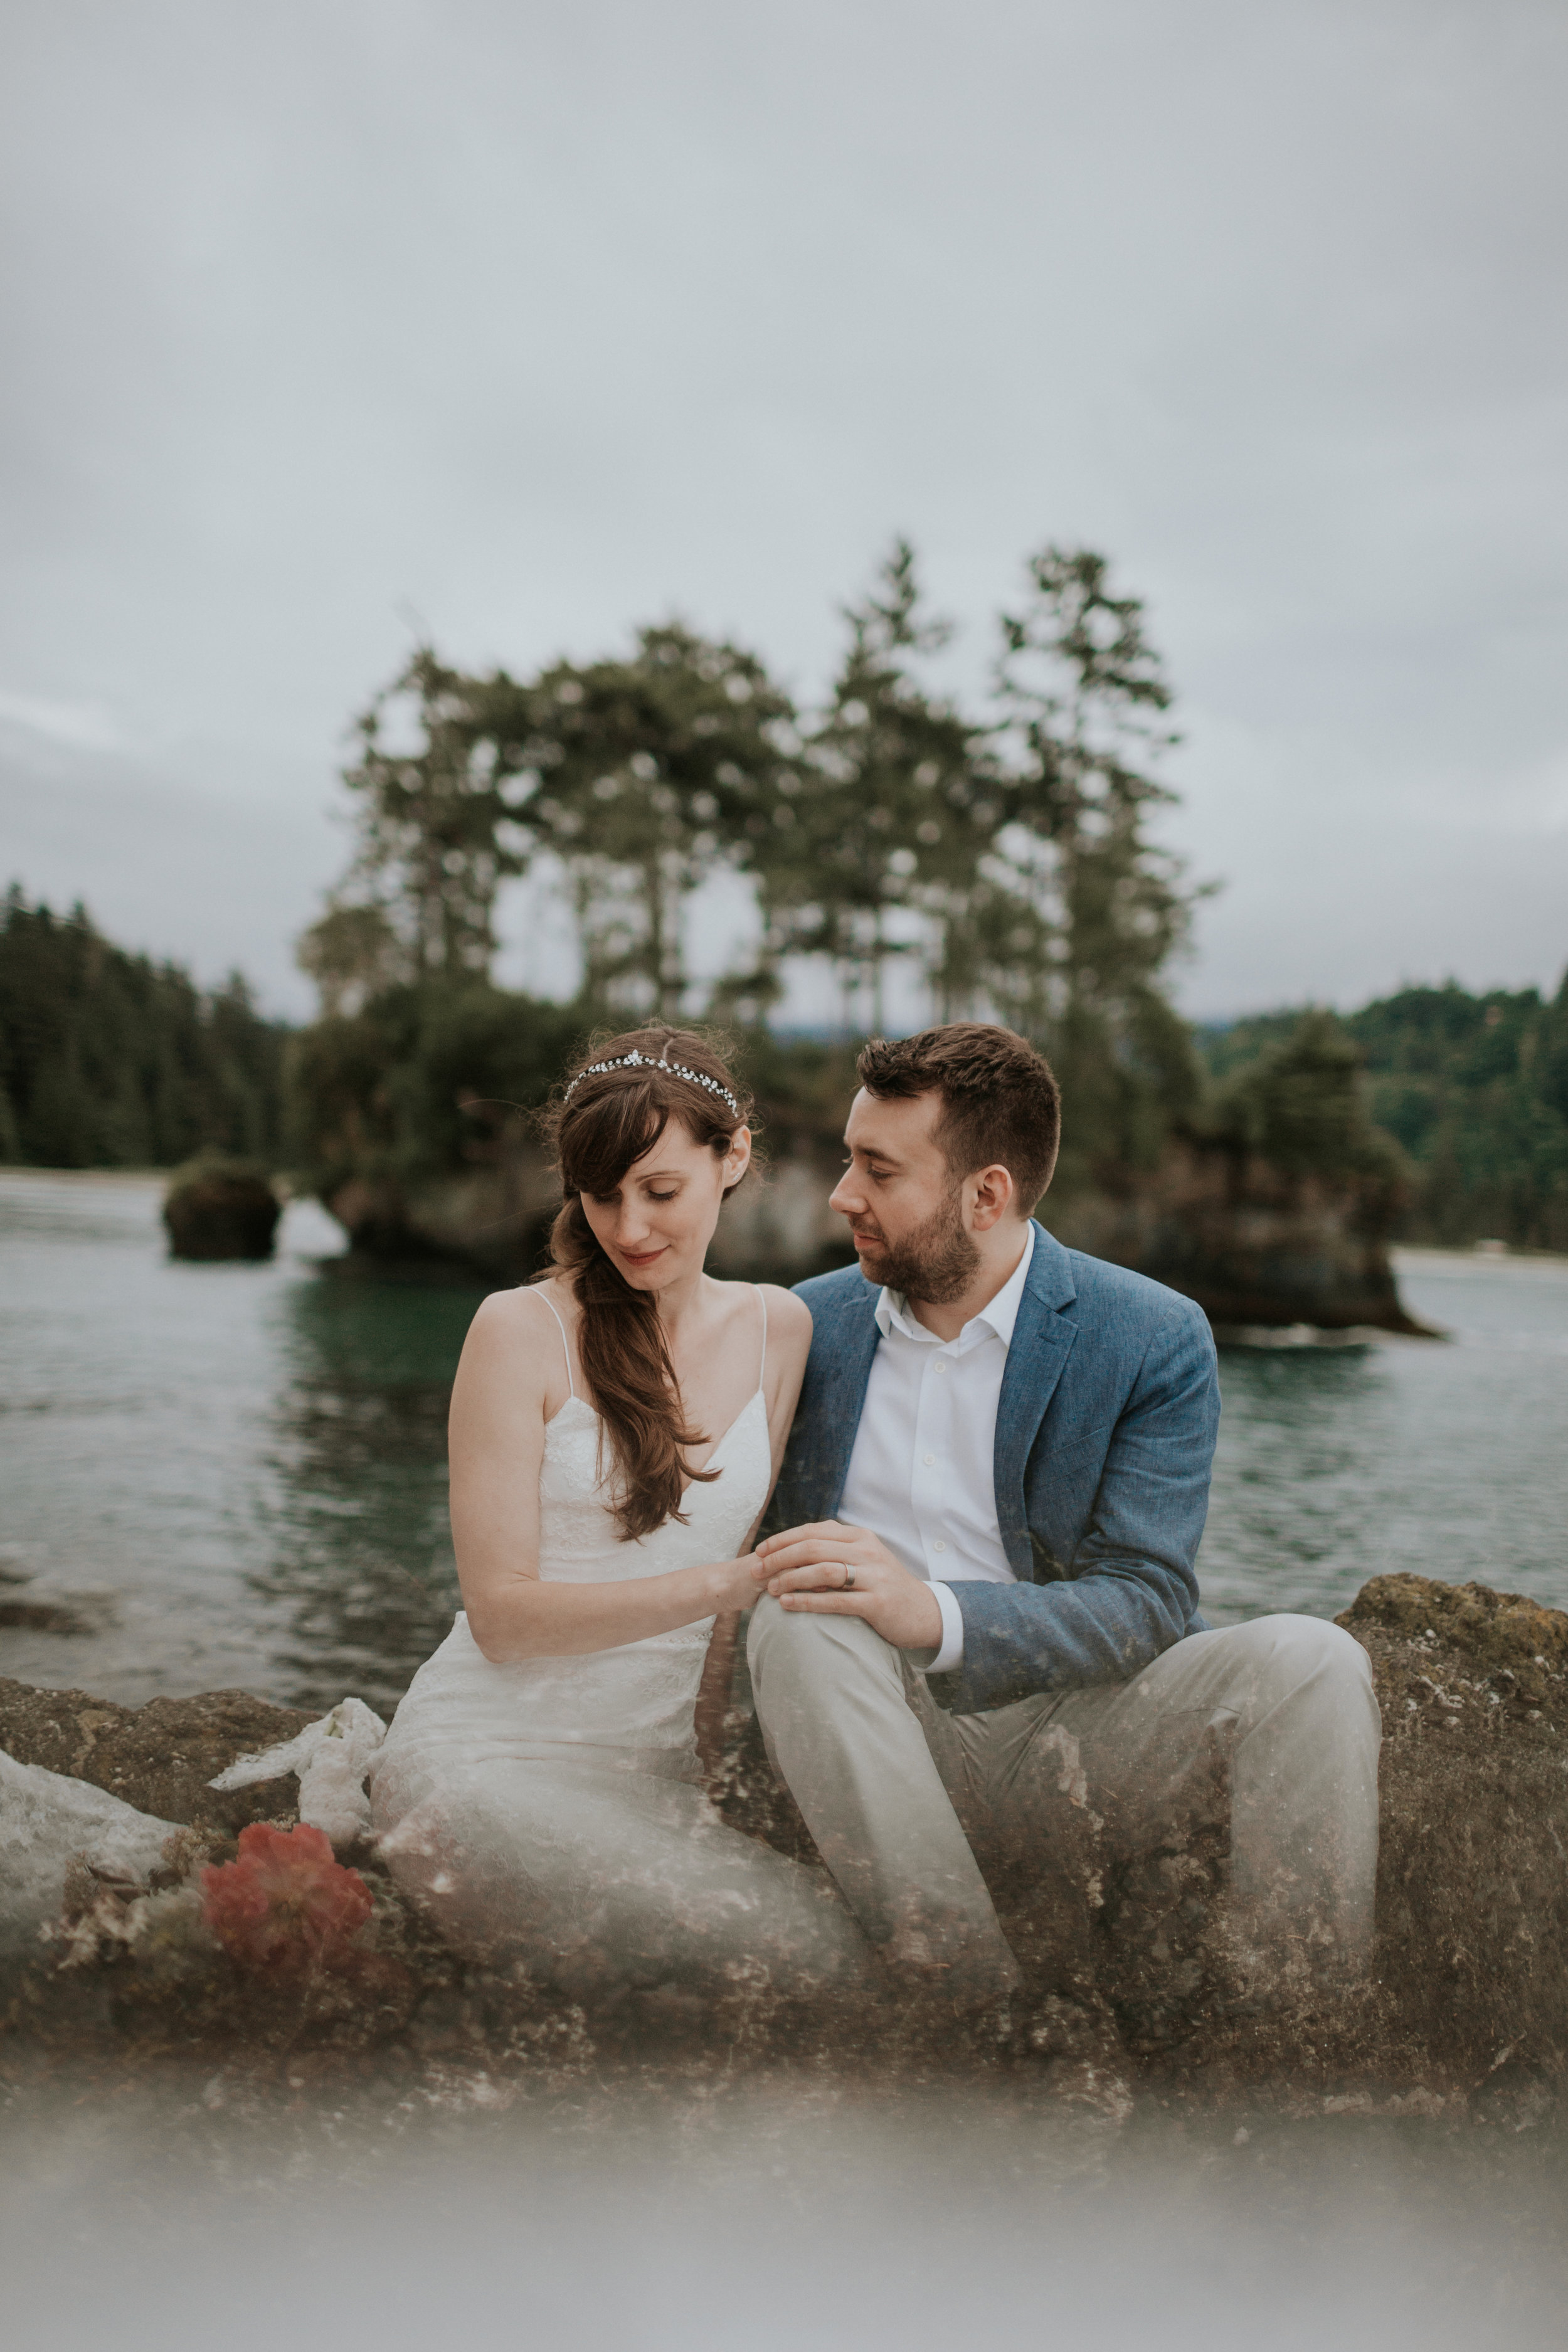 PNW-elopement-wedding-engagement-olympic national park-port angeles-hurricane ridge-lake crescent-kayla dawn photography- photographer-photography-kayladawnphoto-319.jpg